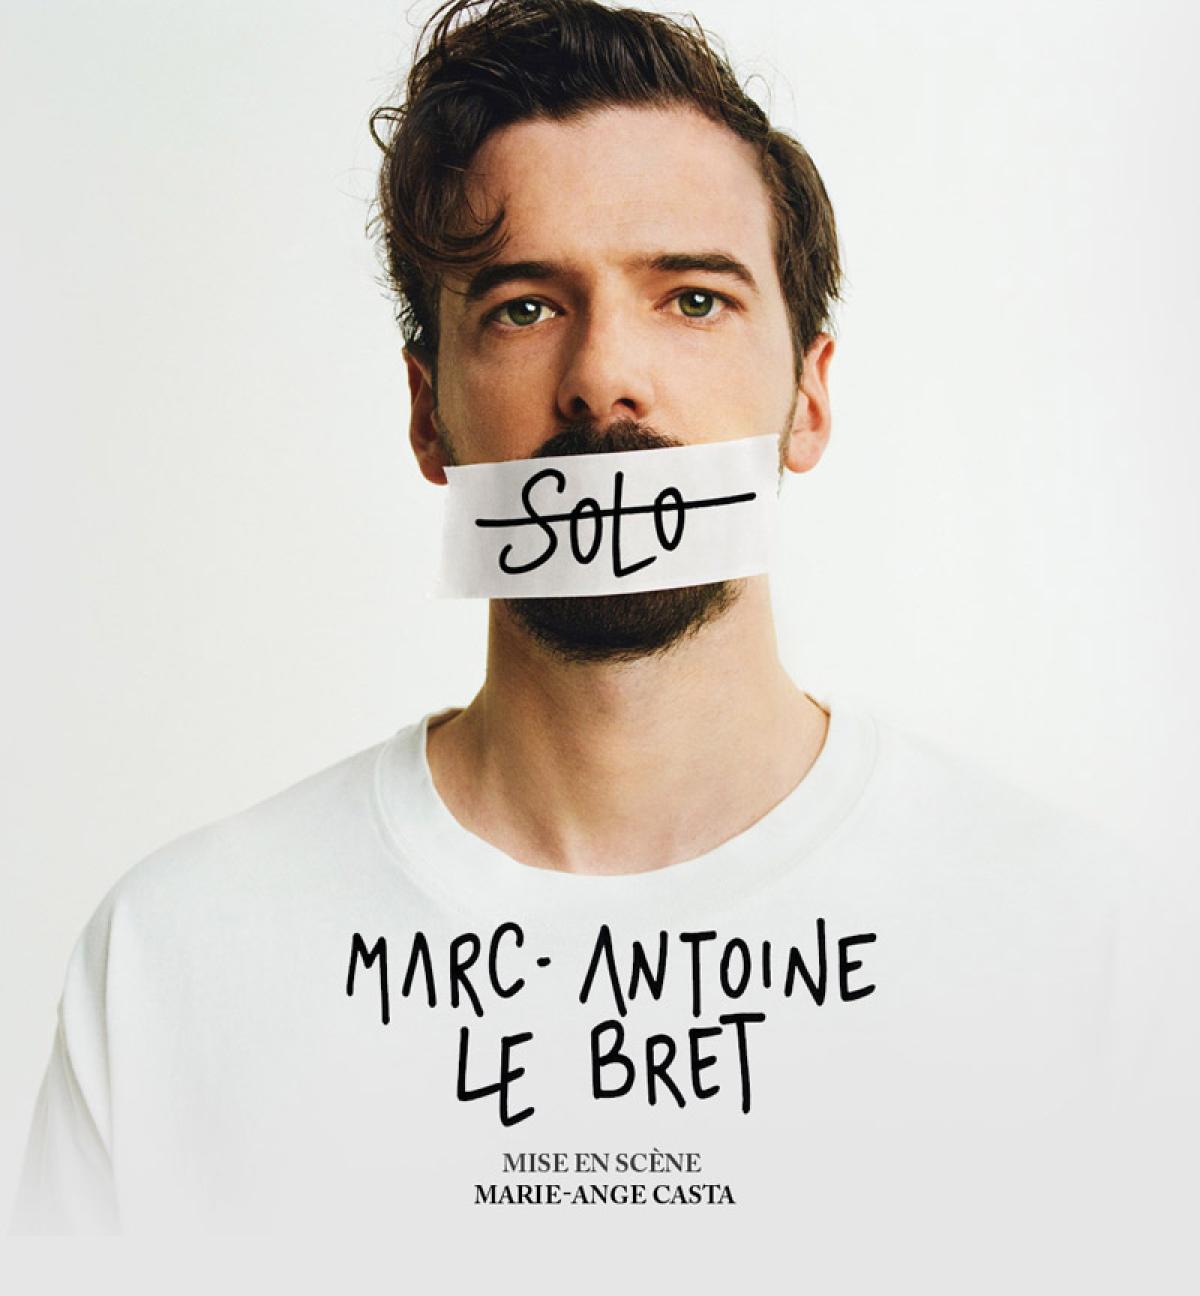 Marc-Antoine Le Bret at L'EMC2 Tickets